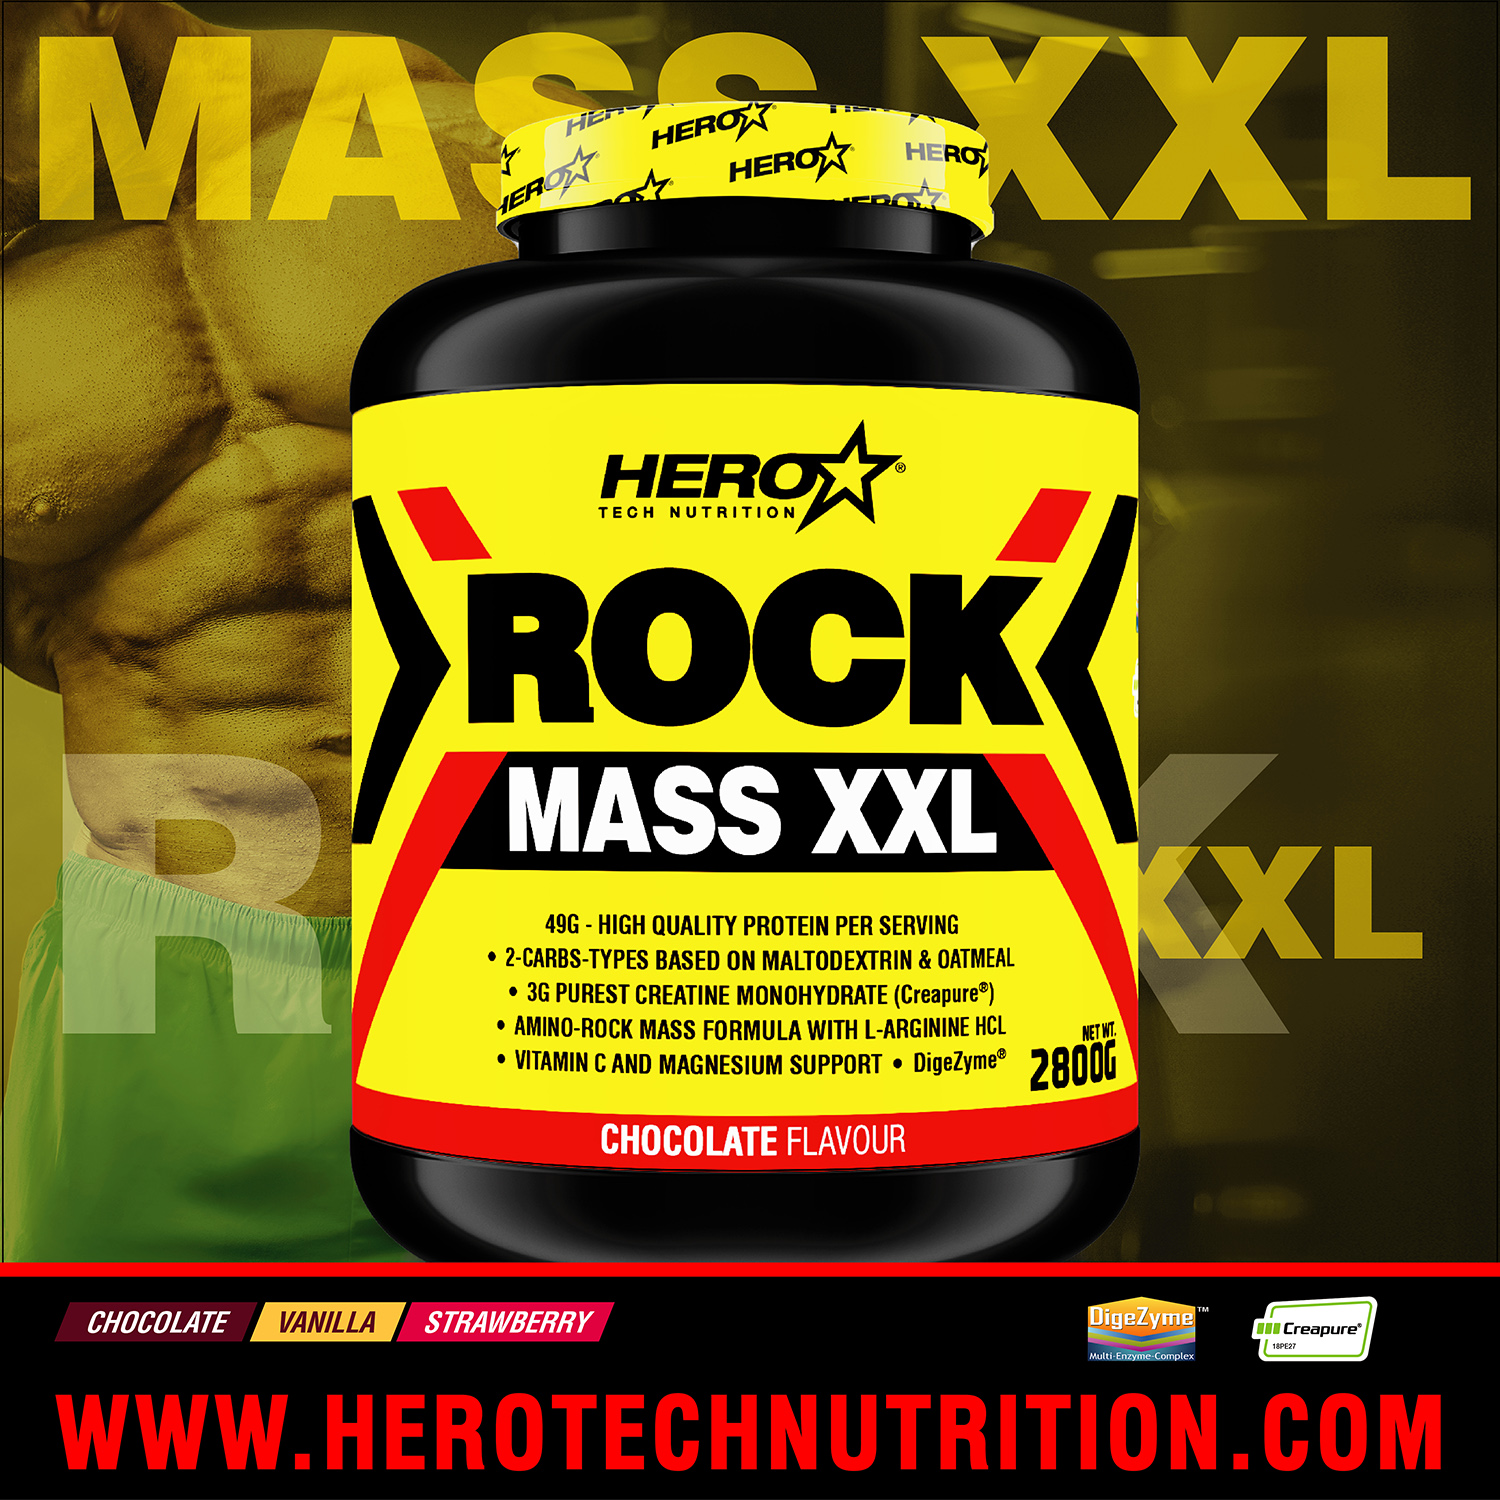 ROCK MASSS XXL ALL IN ONE HERO TECH NUTRITION MUSCLE MASS GROWTH herotechnutrition